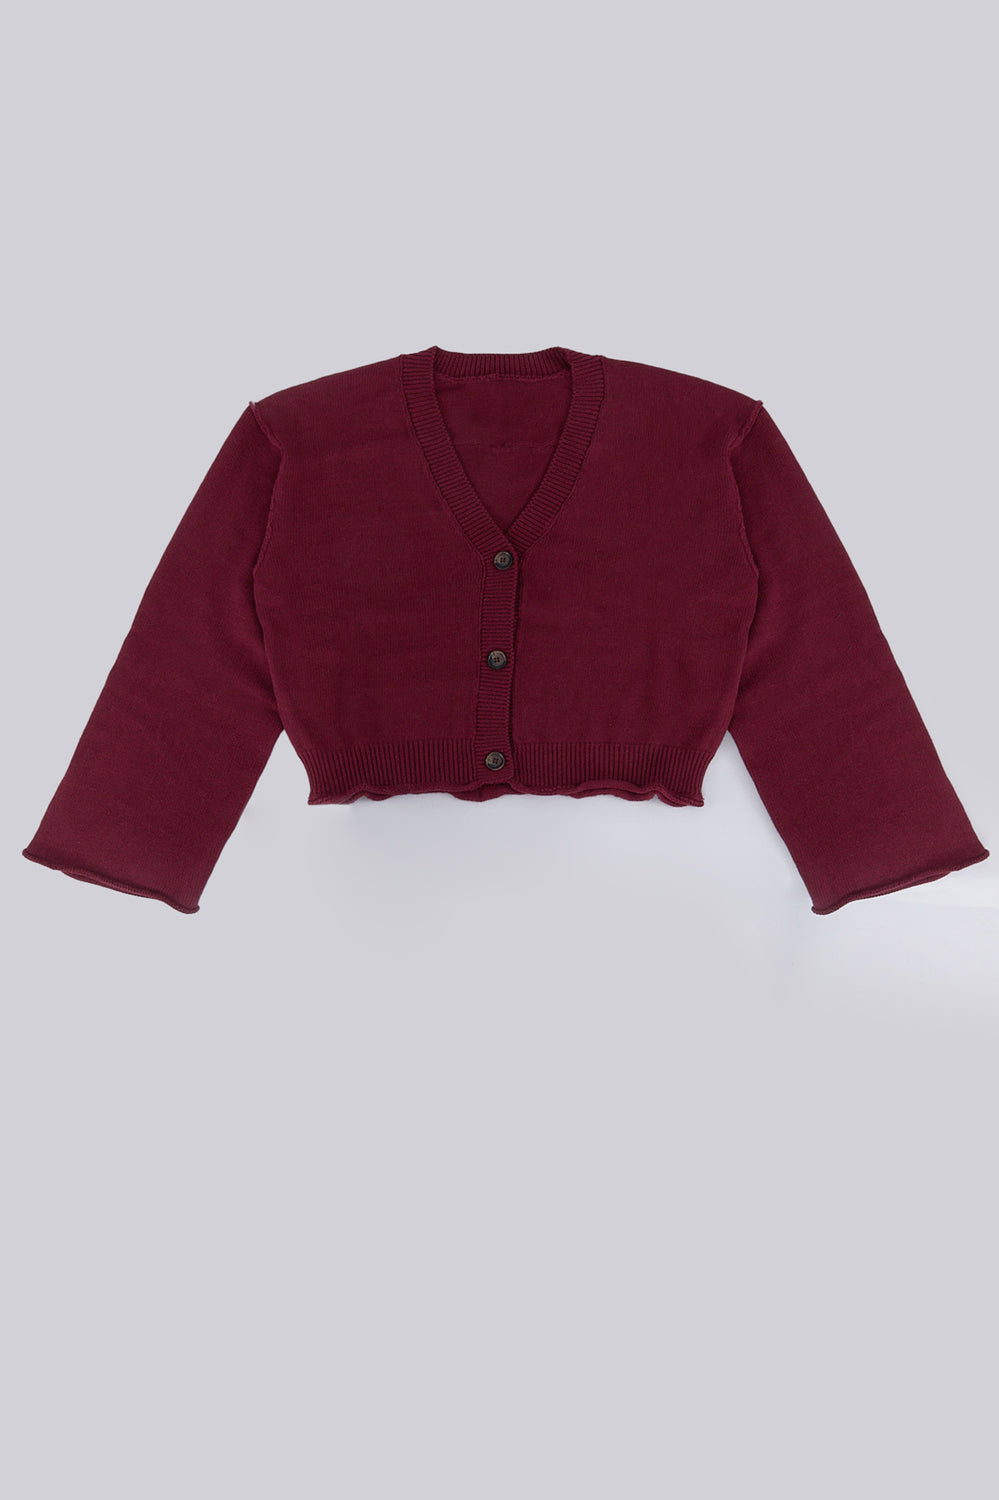 Plus Size Cropped Cardigan Sweater Burgundy